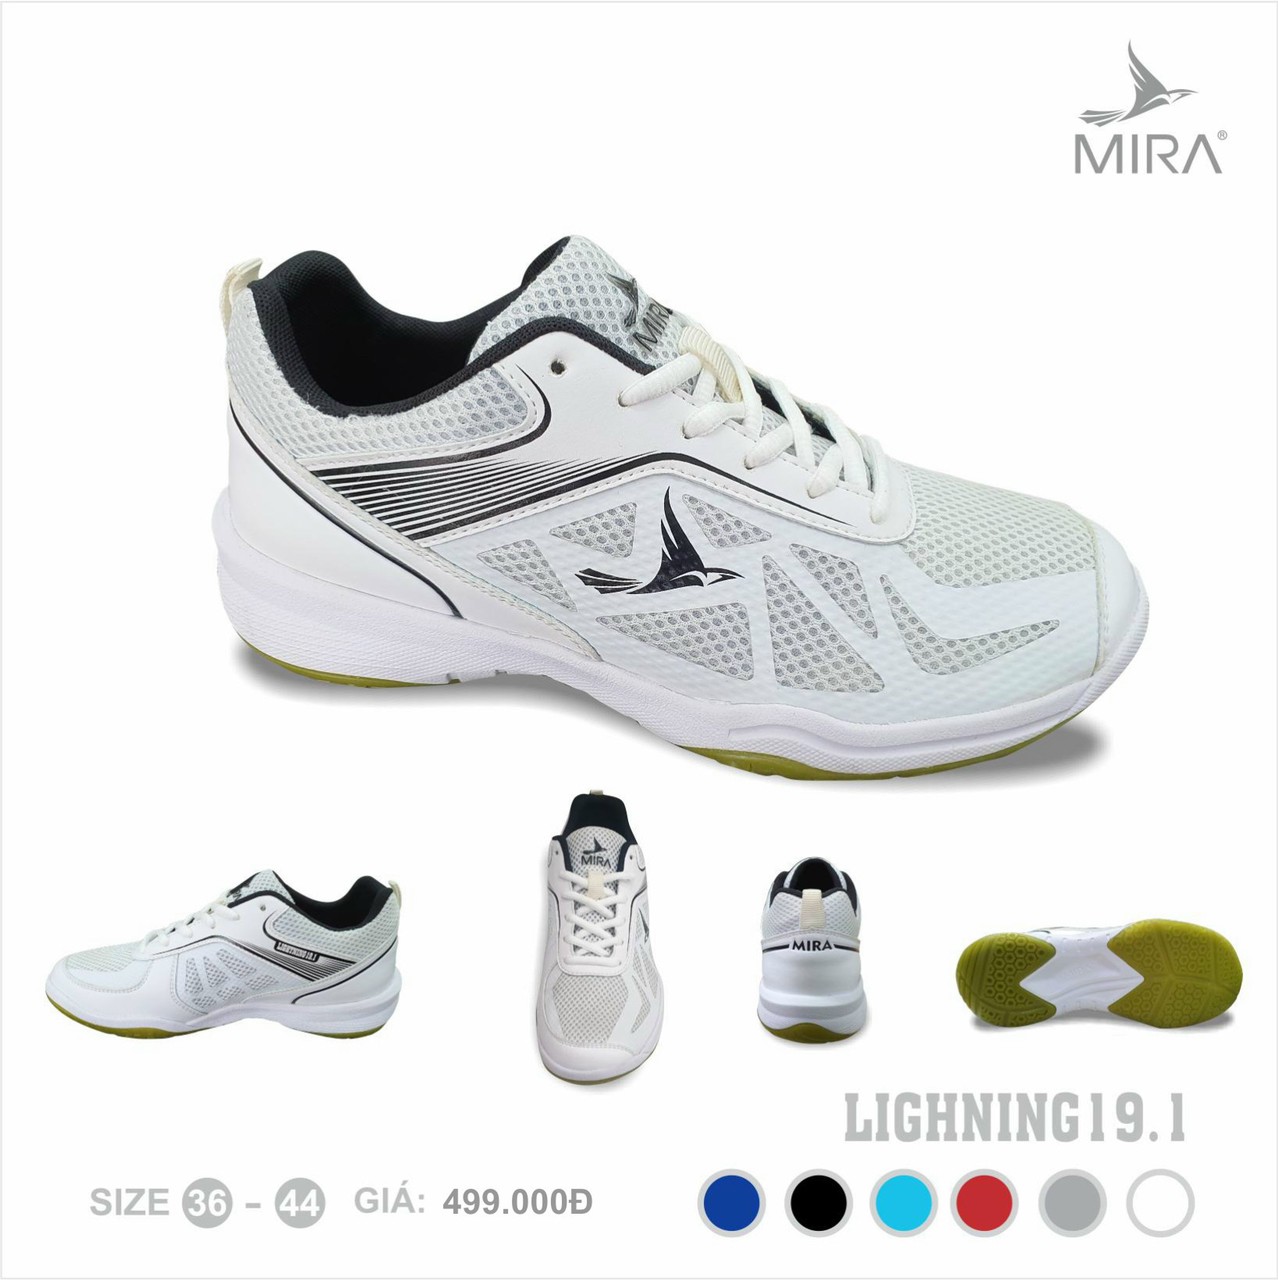 Mira lightning 19.1 premium genuine badminton shoes